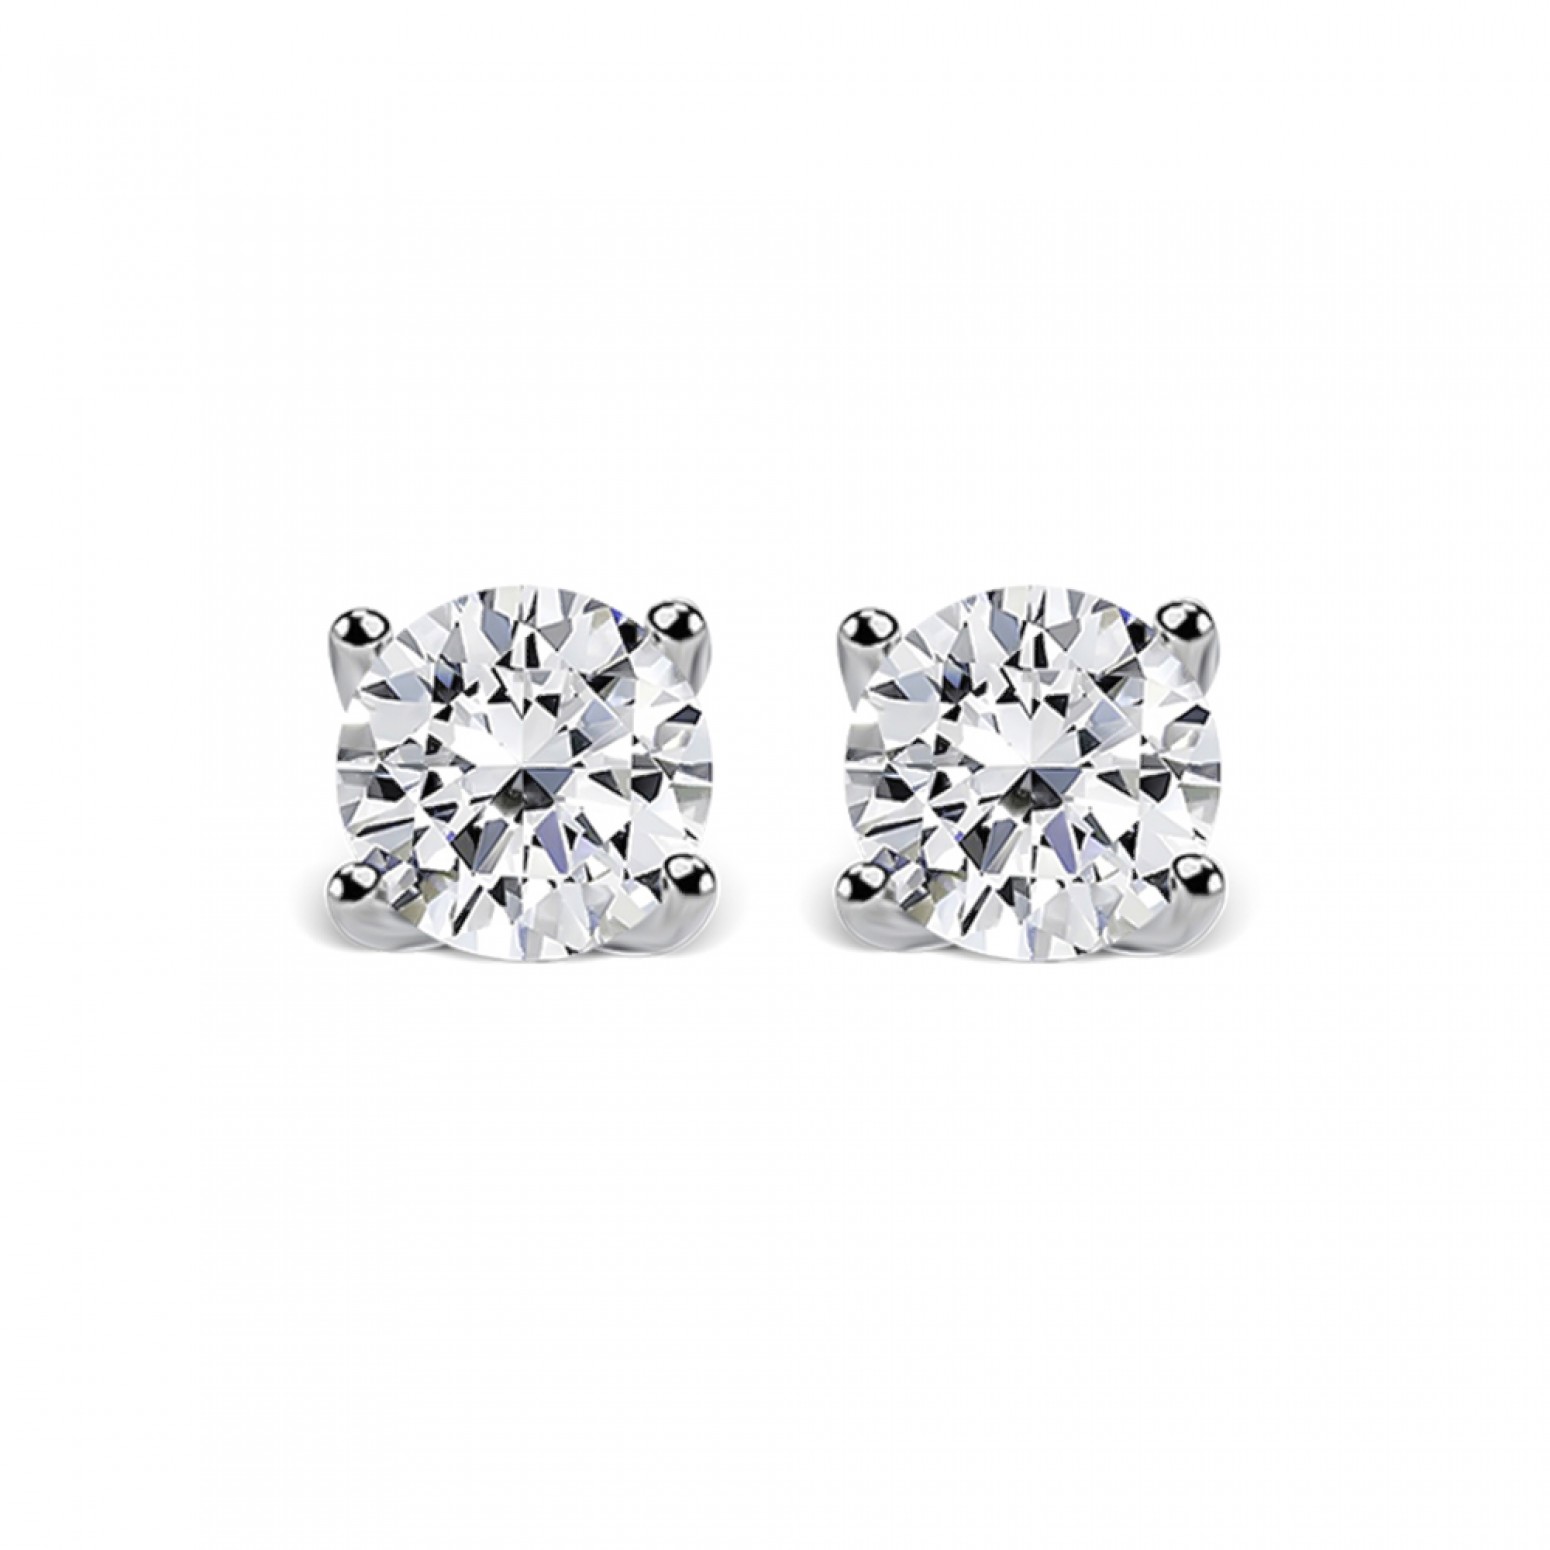 Solitaire earrings 18K white gold with diamonds 0.82ct, VS1, F from GIA sk2675 EARRINGS Κοσμηματα - chrilia.gr